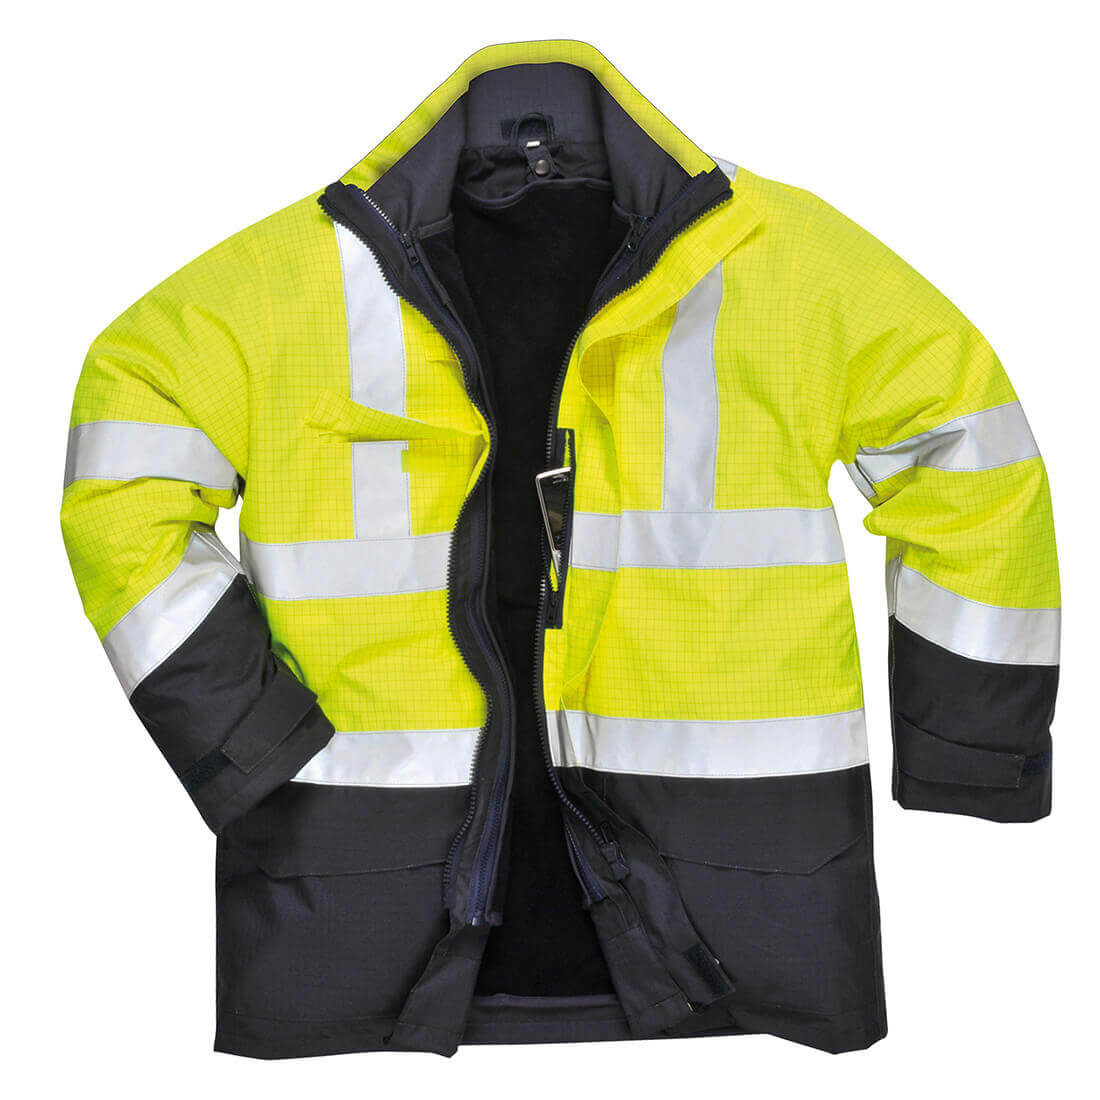 Image of Biz Flame Hi Vis Flame Resistant Rain Multi Protection Jacket Yellow / Navy 4XL